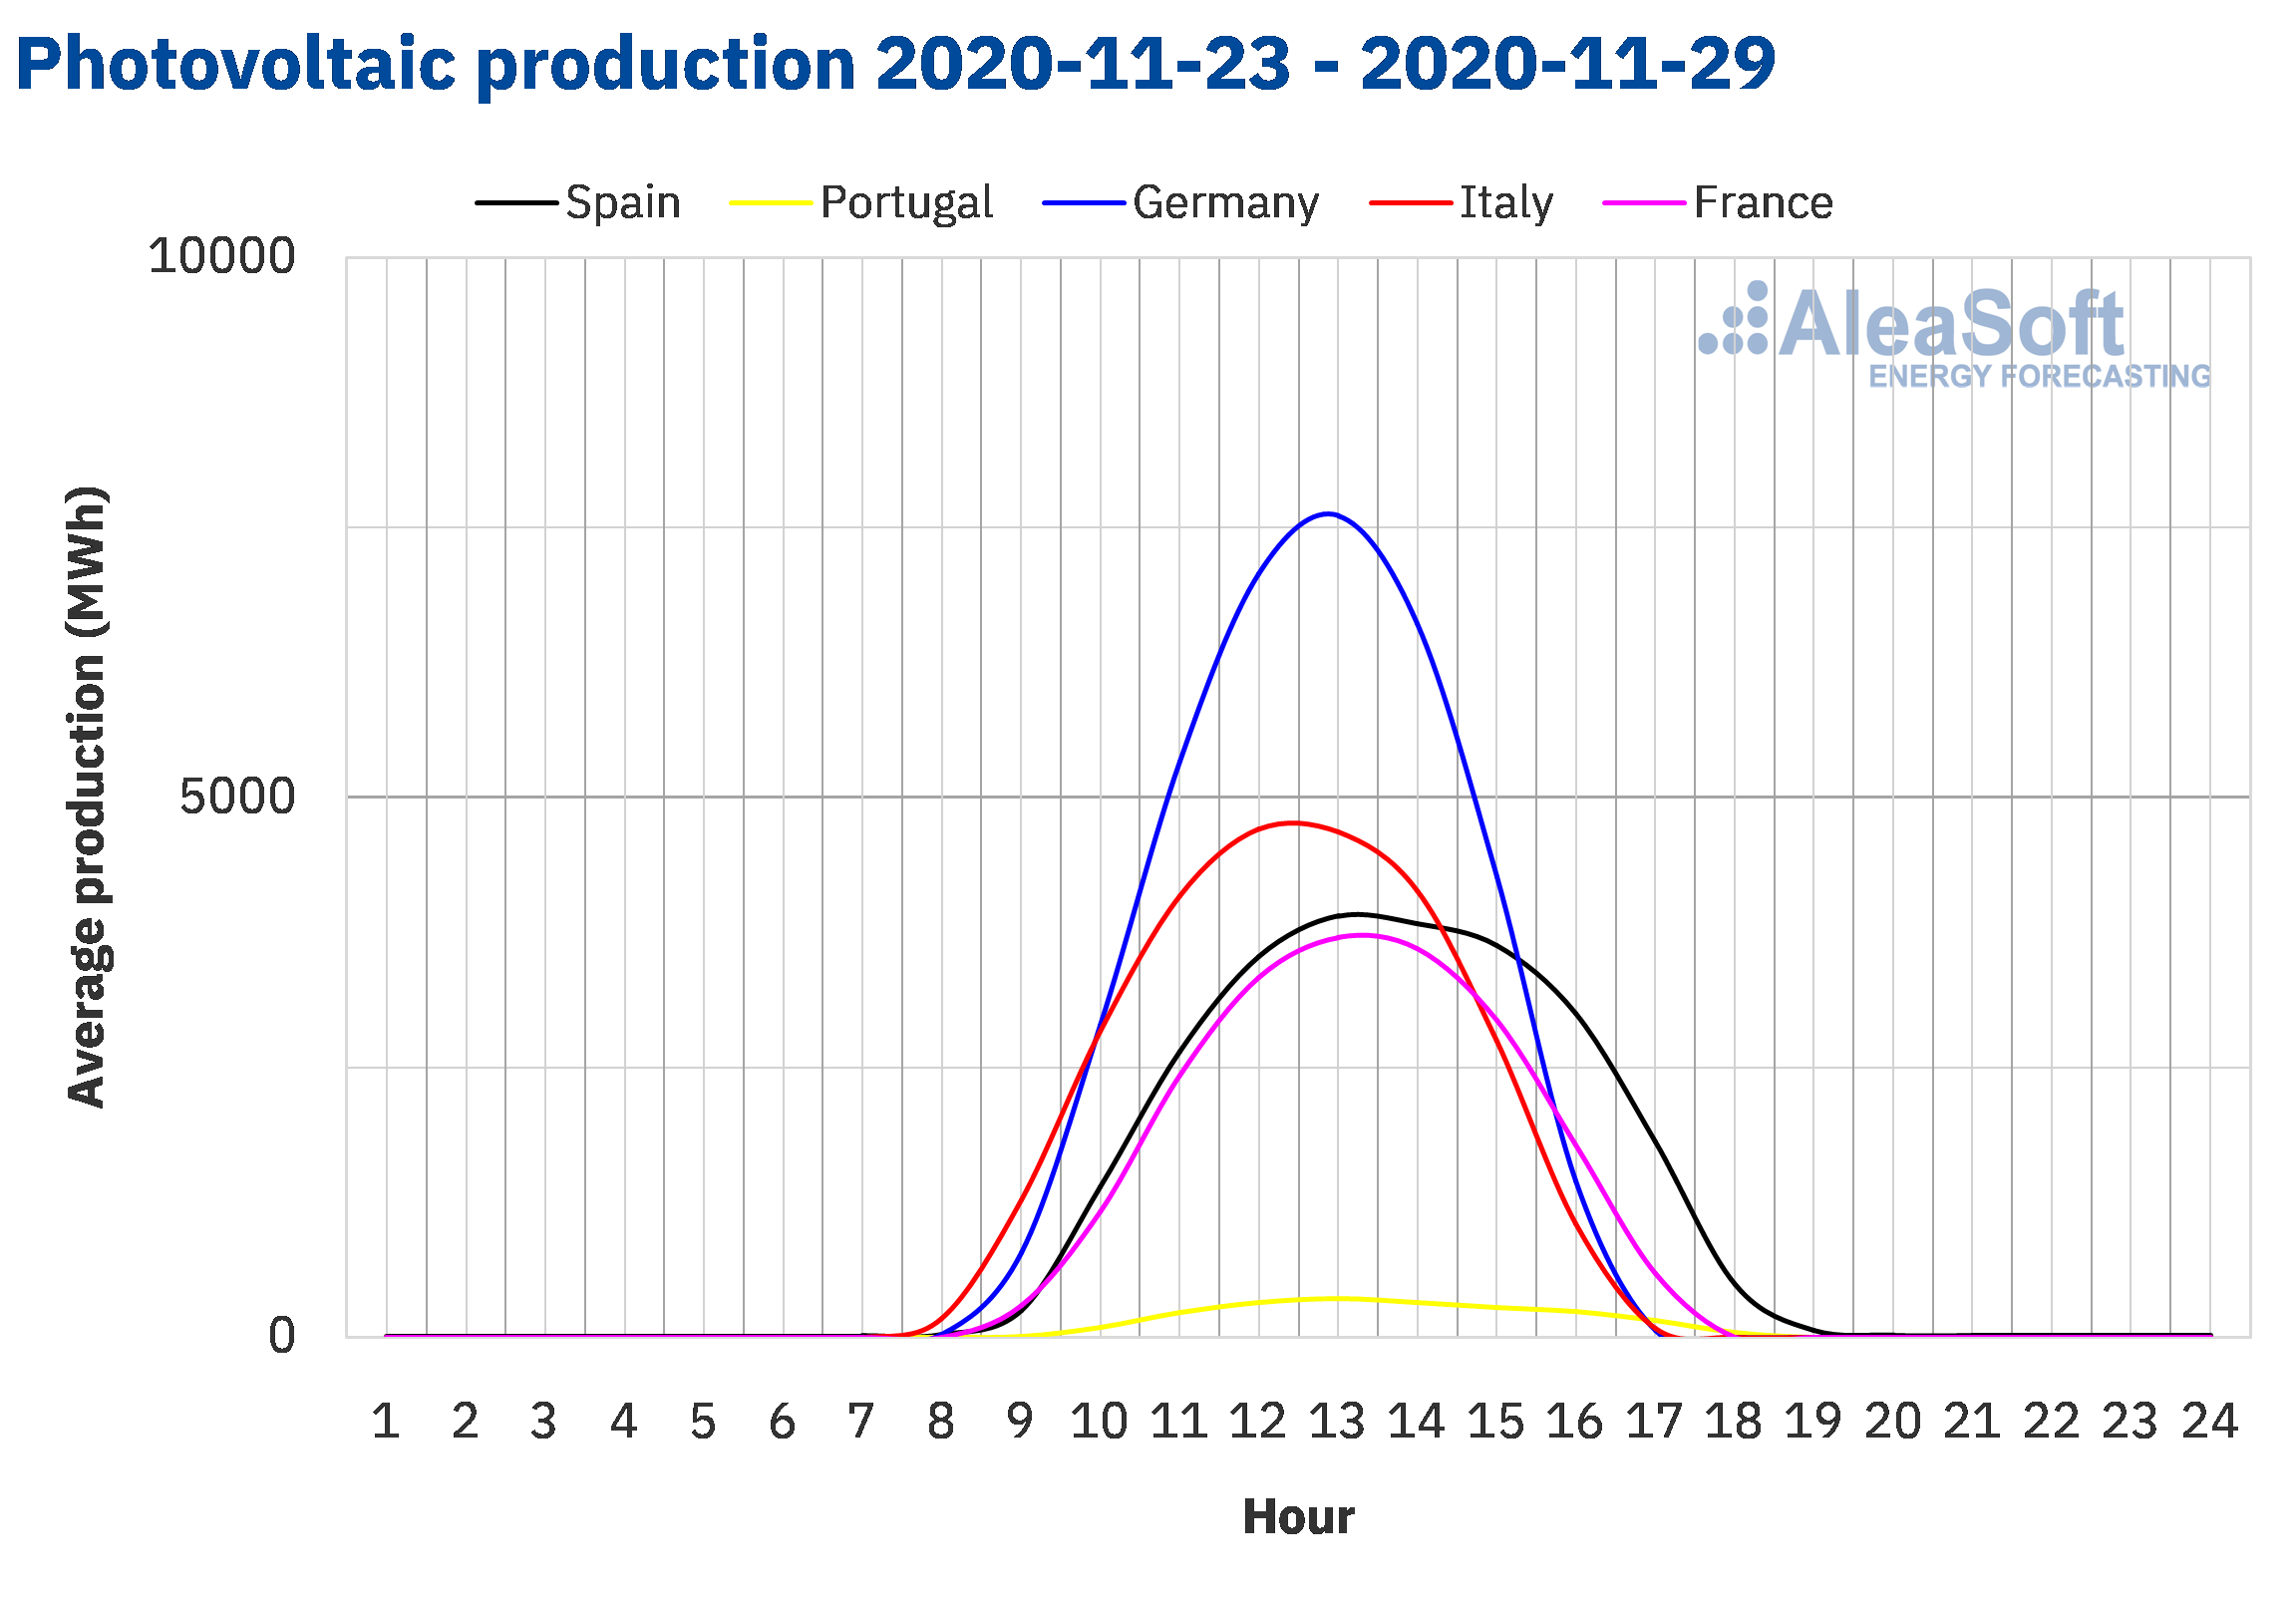 AleaSoft - Solar photovoltaic production profile of Europe